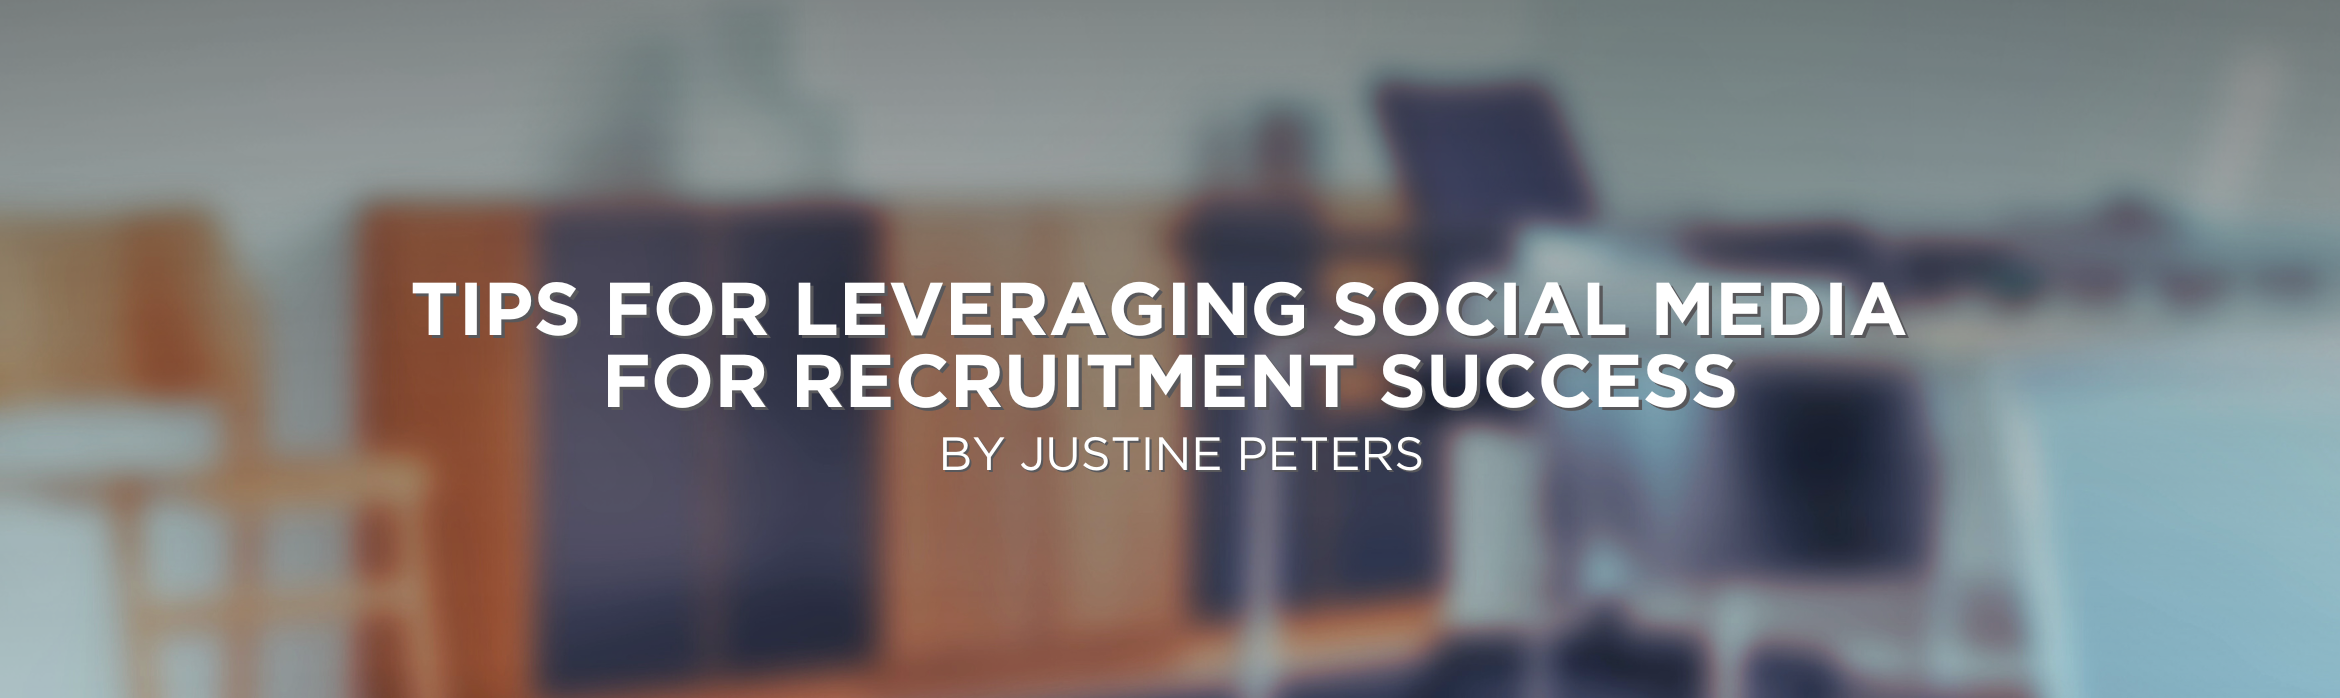 Tips for Leveraging Social Media for Recruitment Success